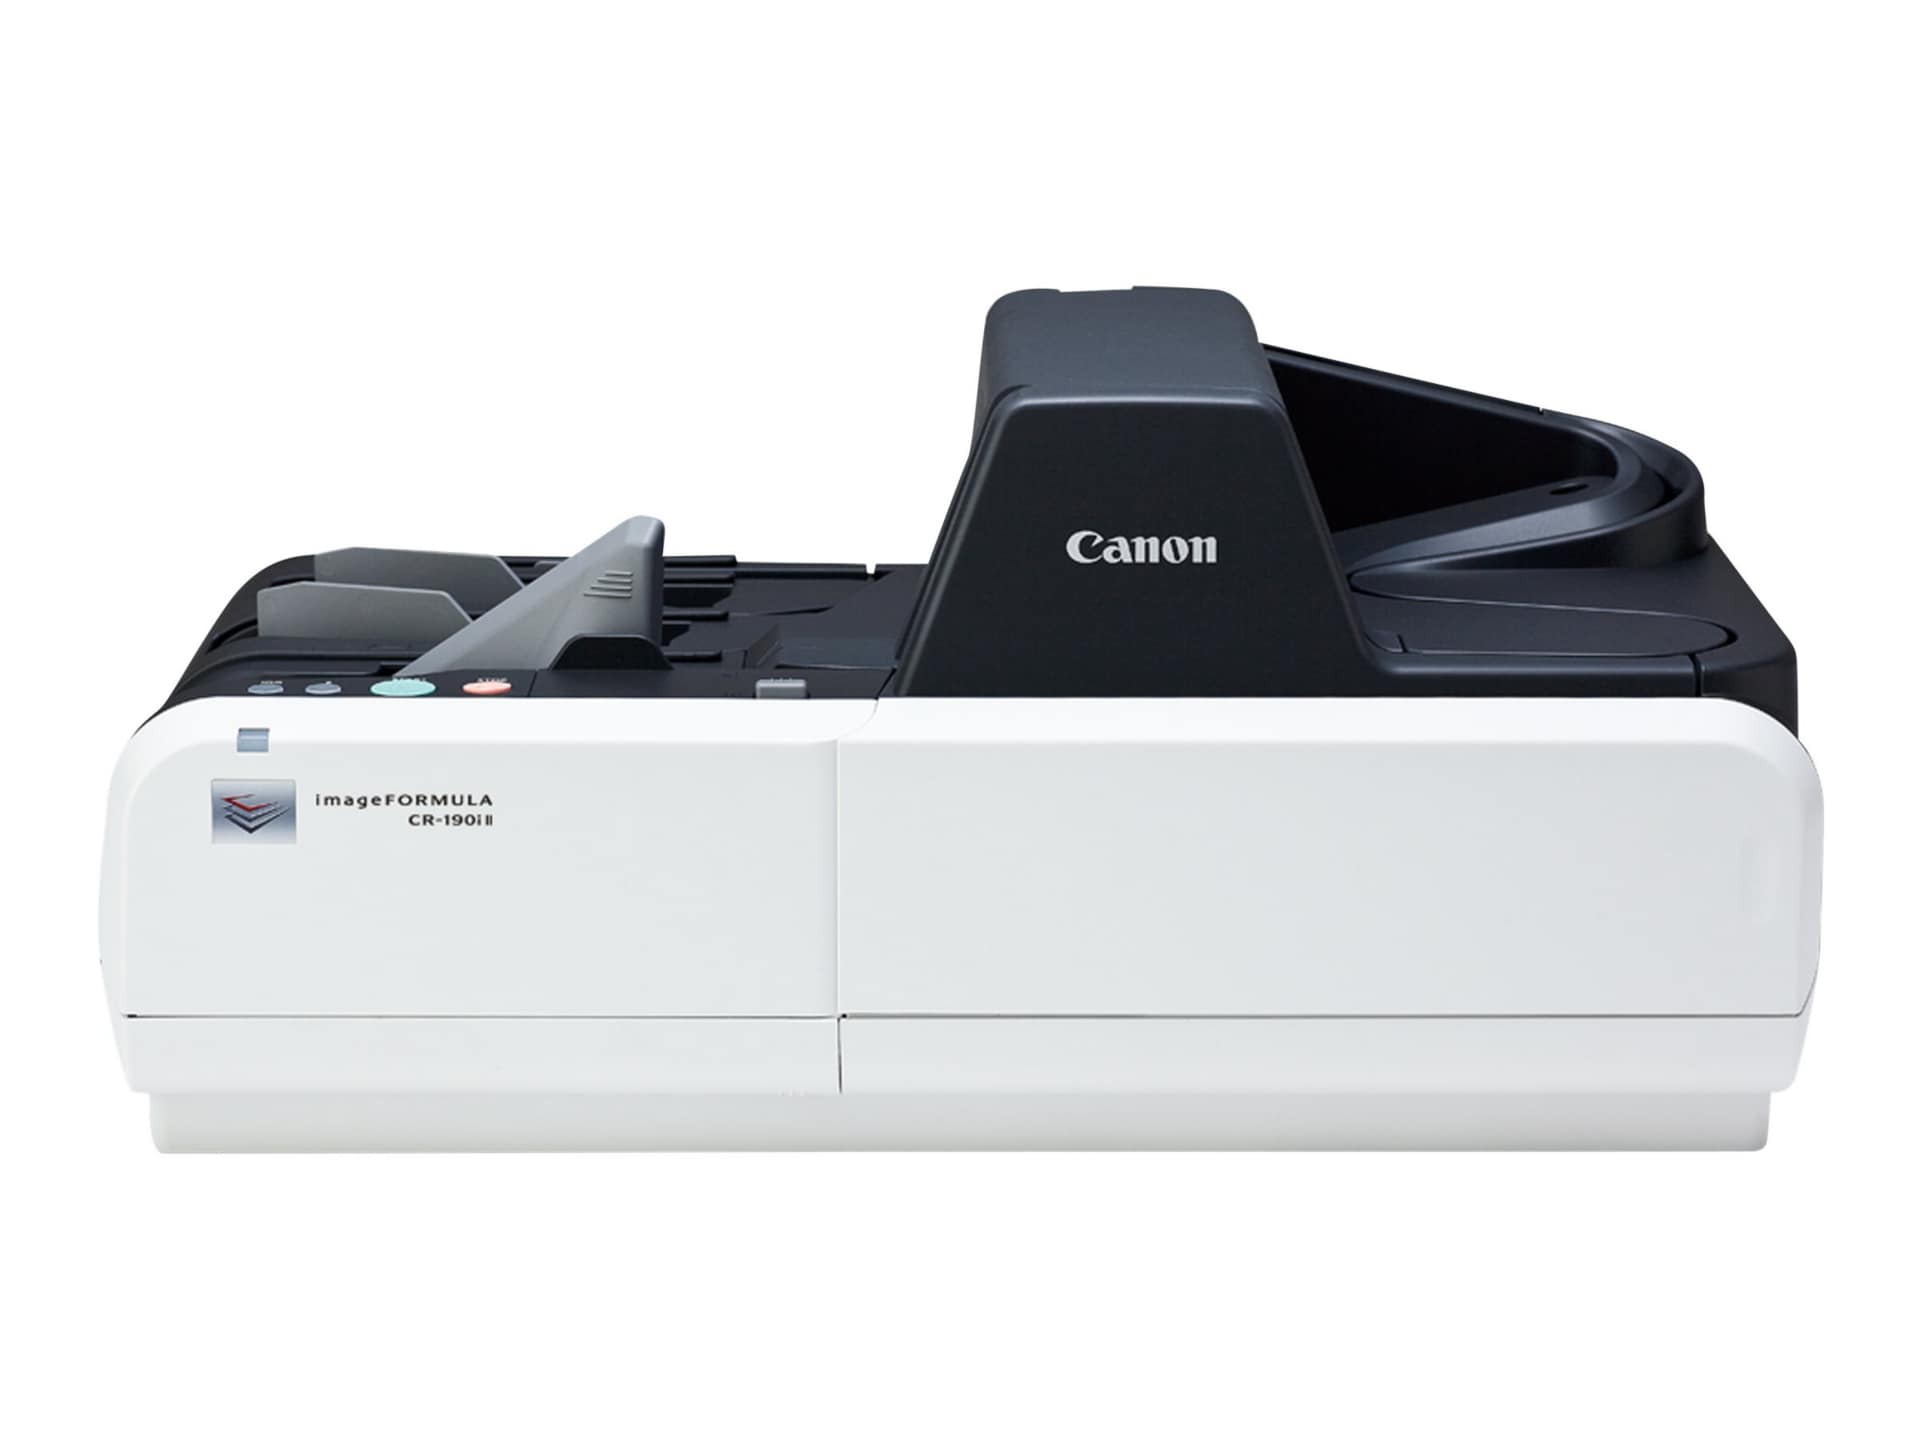 Canon imageFORMULA CR-190i II Document Scanner